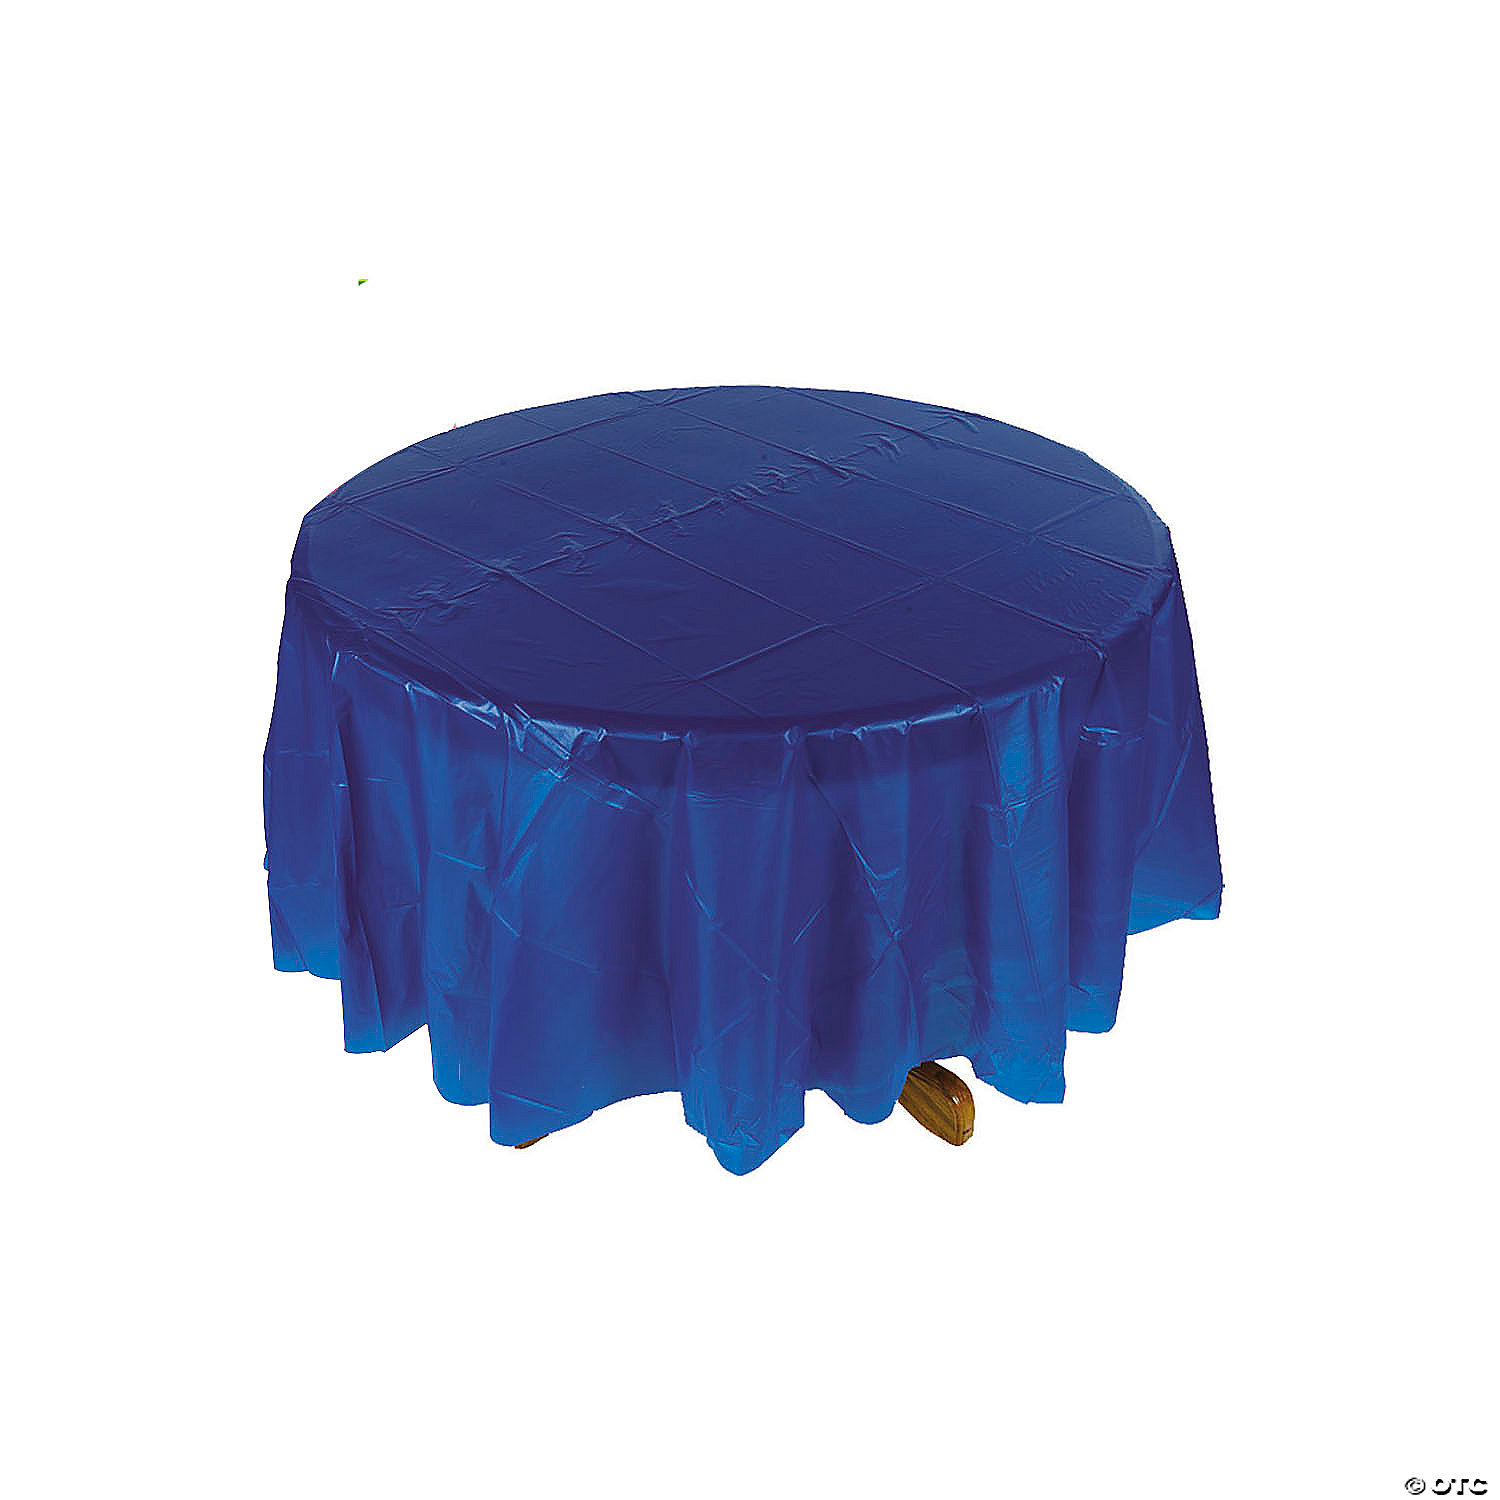 Plastic Table Cloth Unique 84" Round Cover Royal Blue